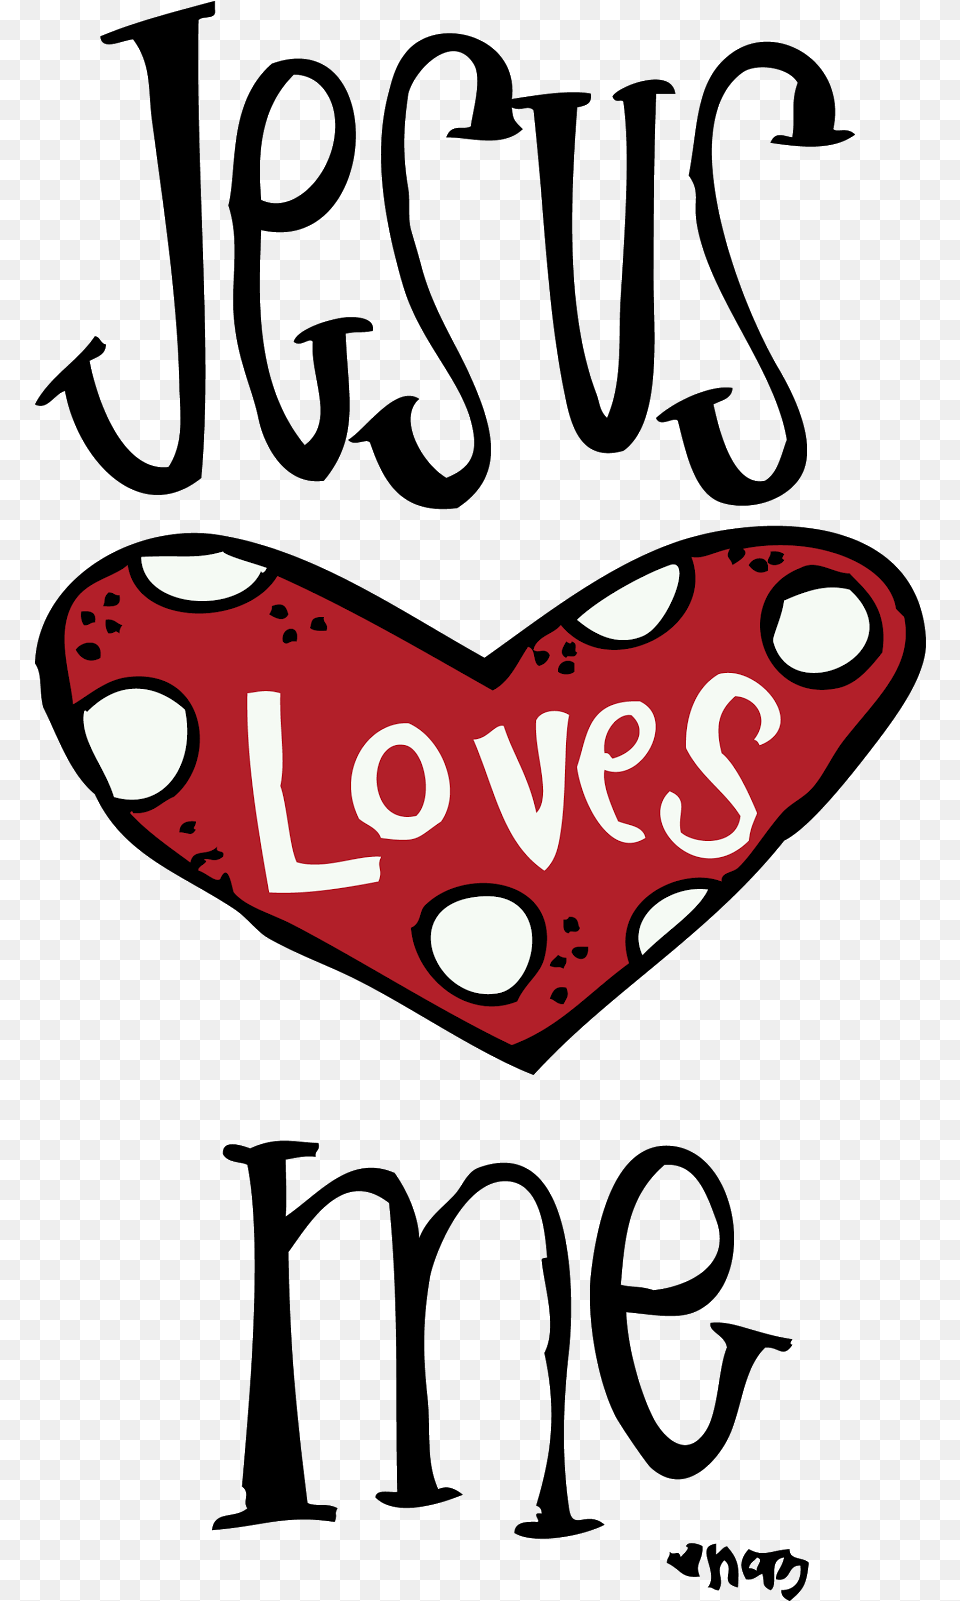 Love Jesus Clipart 2 By Amanda Melonheadz Jesus Loves Me, Heart, Dynamite, Weapon Png